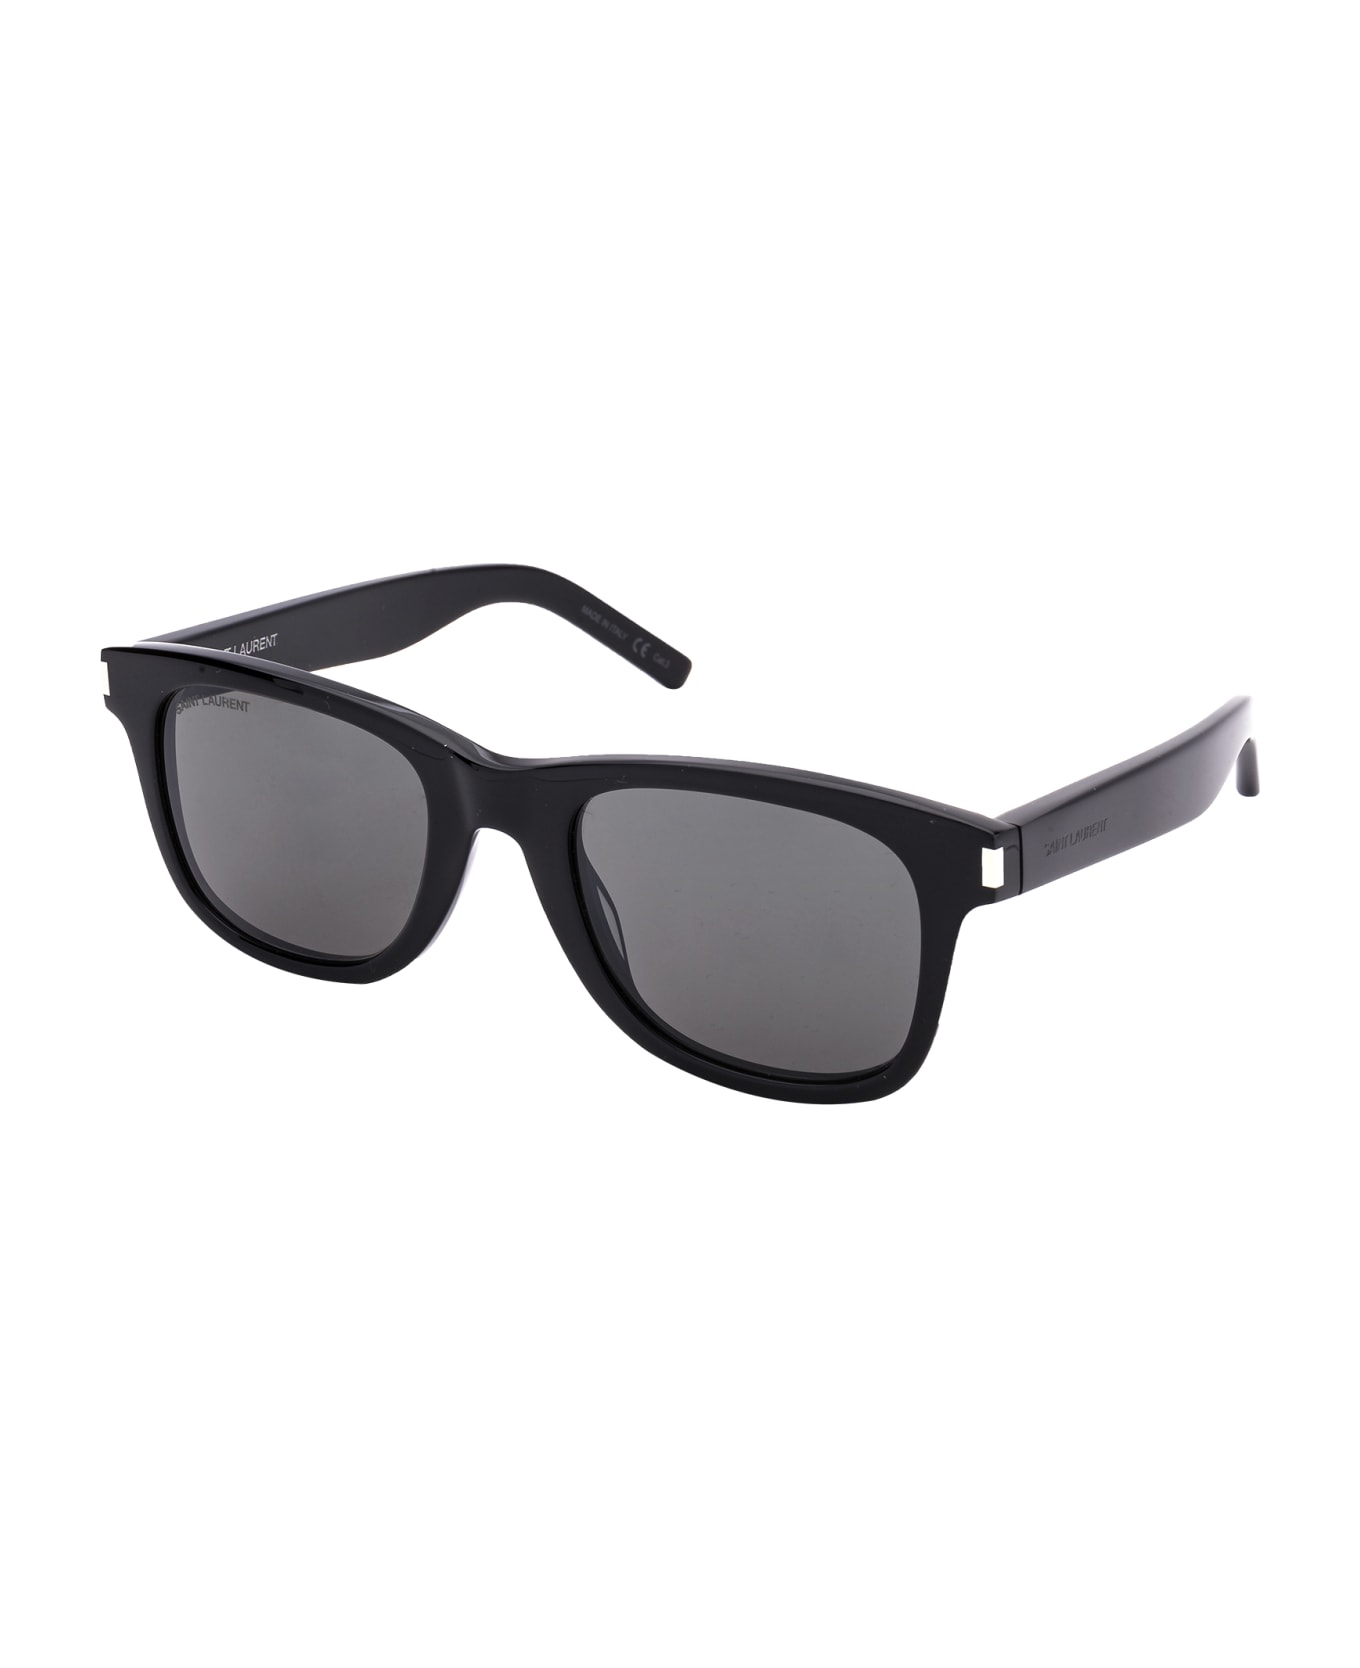 Saint Laurent Eyewear Sl 51 Sunglasses - 002 BLACK BLACK GREY サングラス